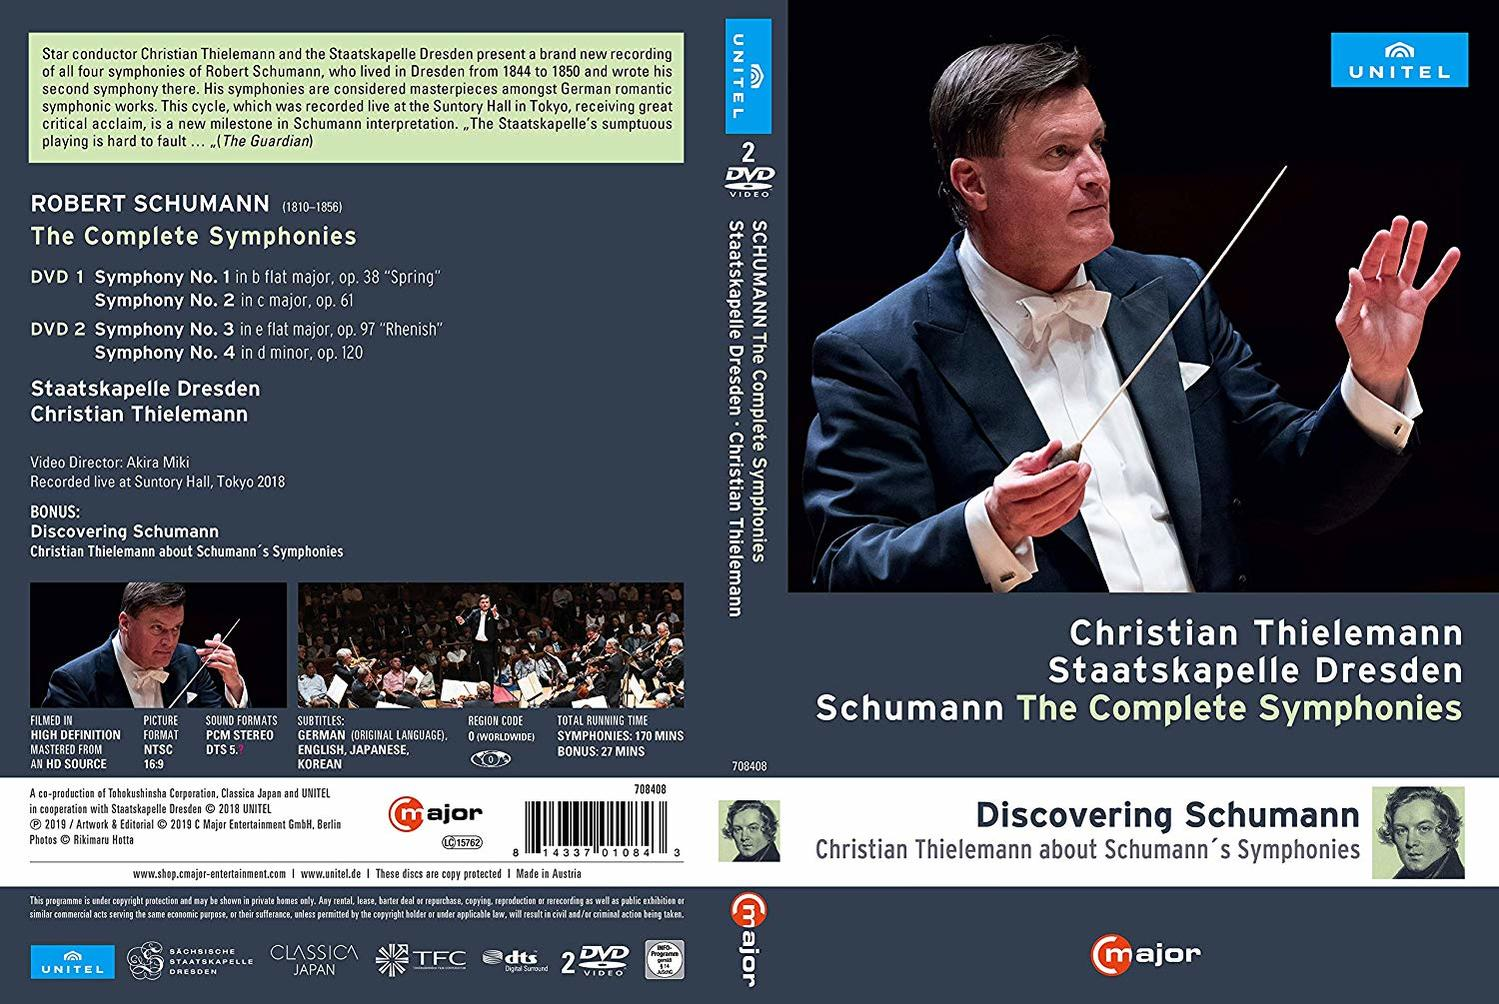 Staatskapelle Dresden, Thielemann Christian Sämtliche Sinfonien (DVD) - - Schumann